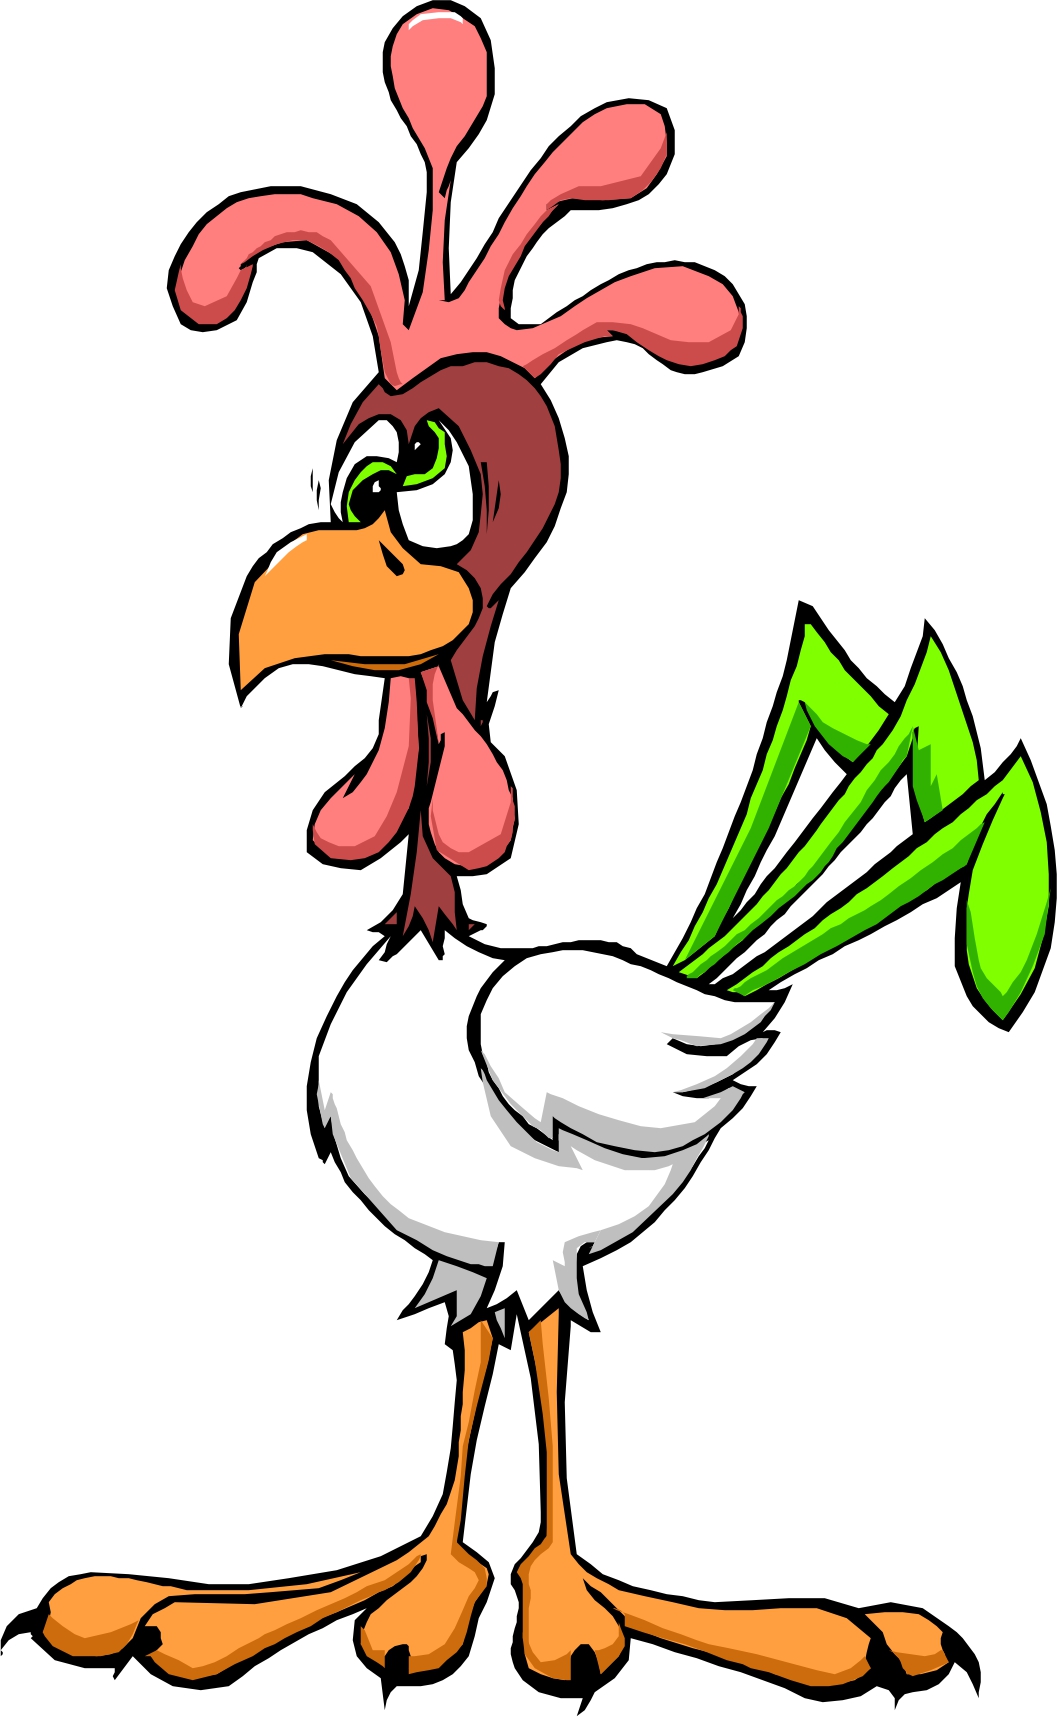 Chicken Image Cartoon 